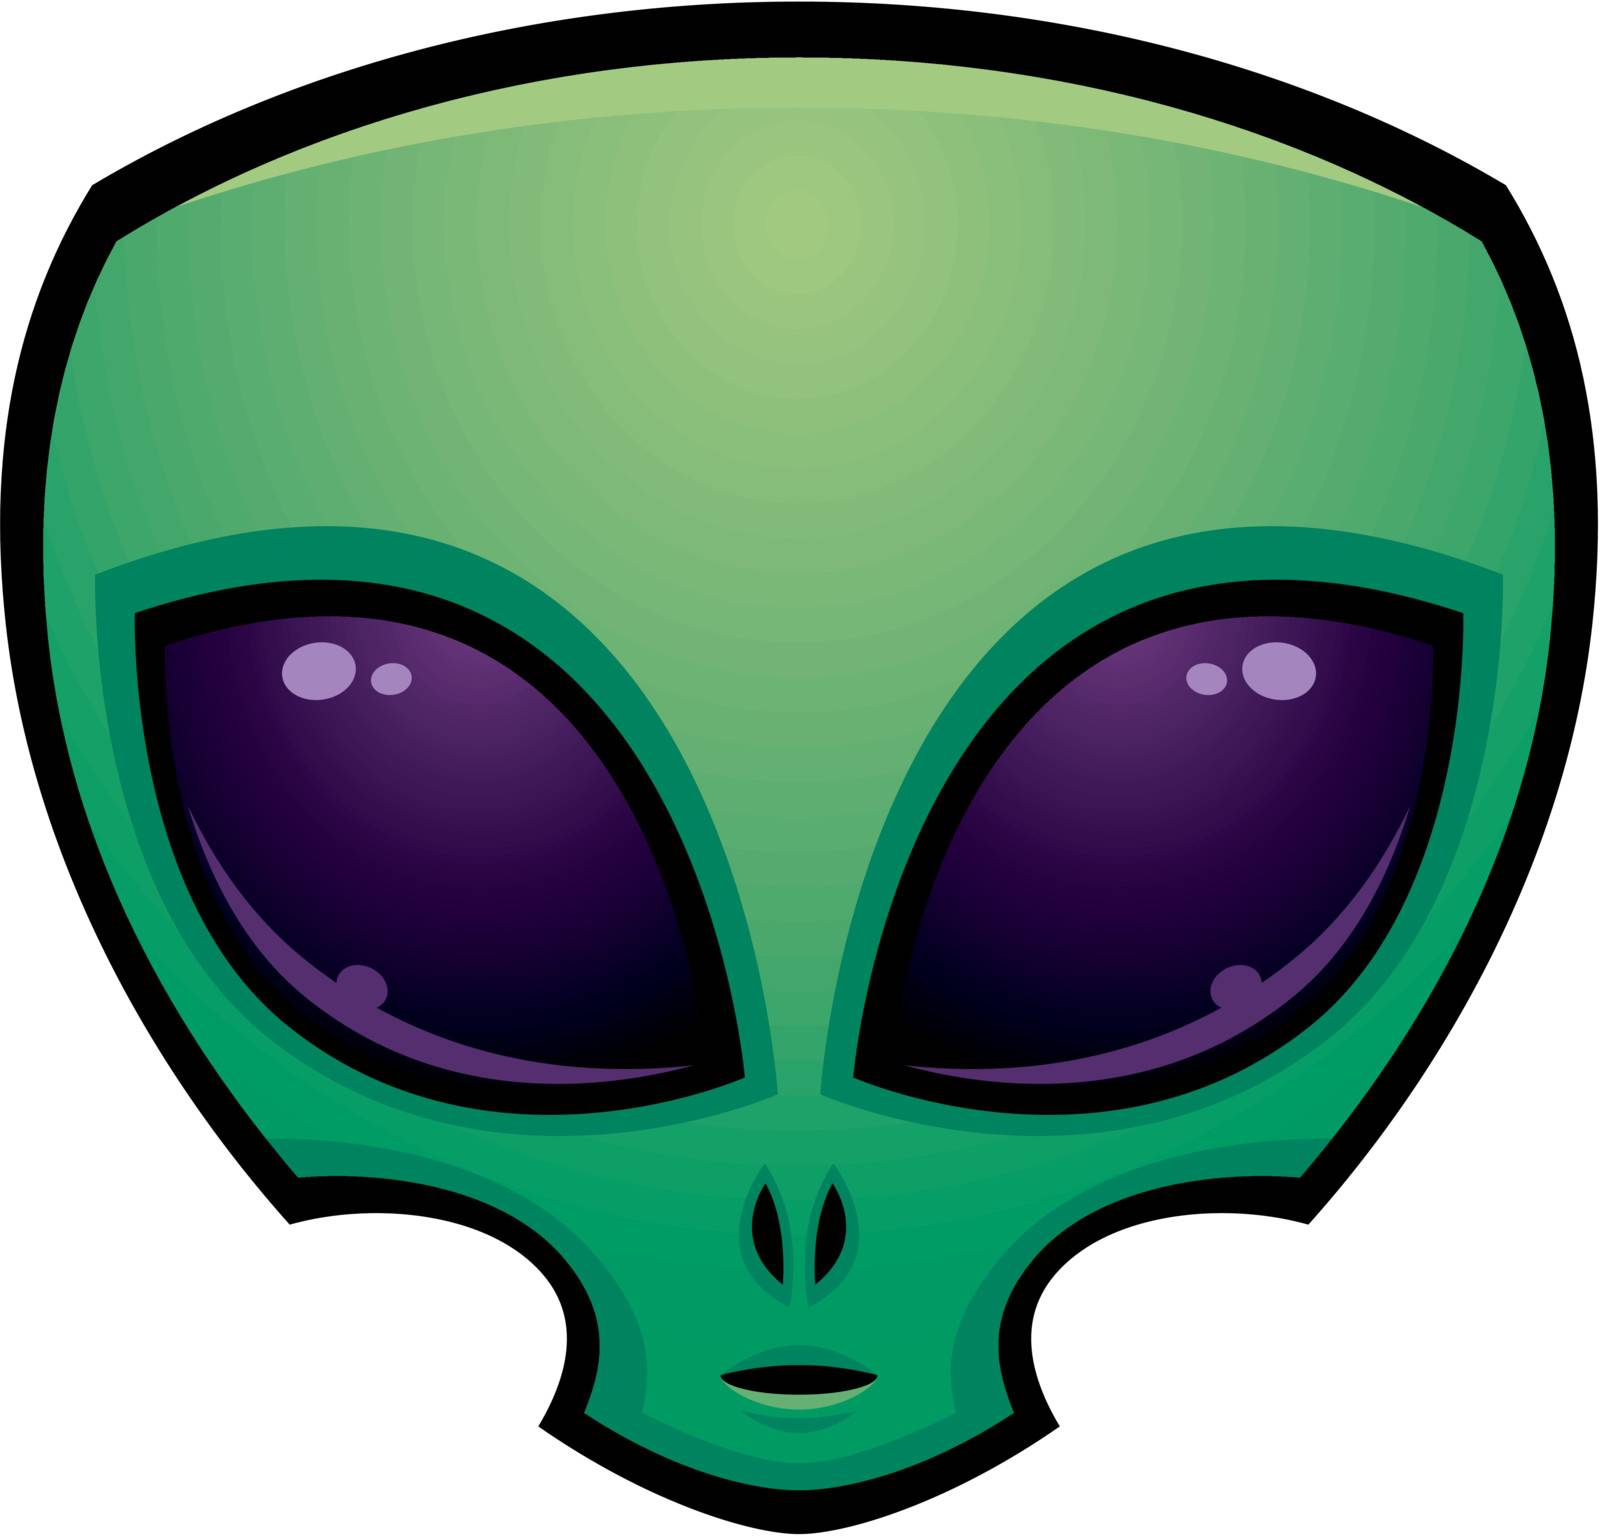 Cartoon alien head illustration with big dark eyes.